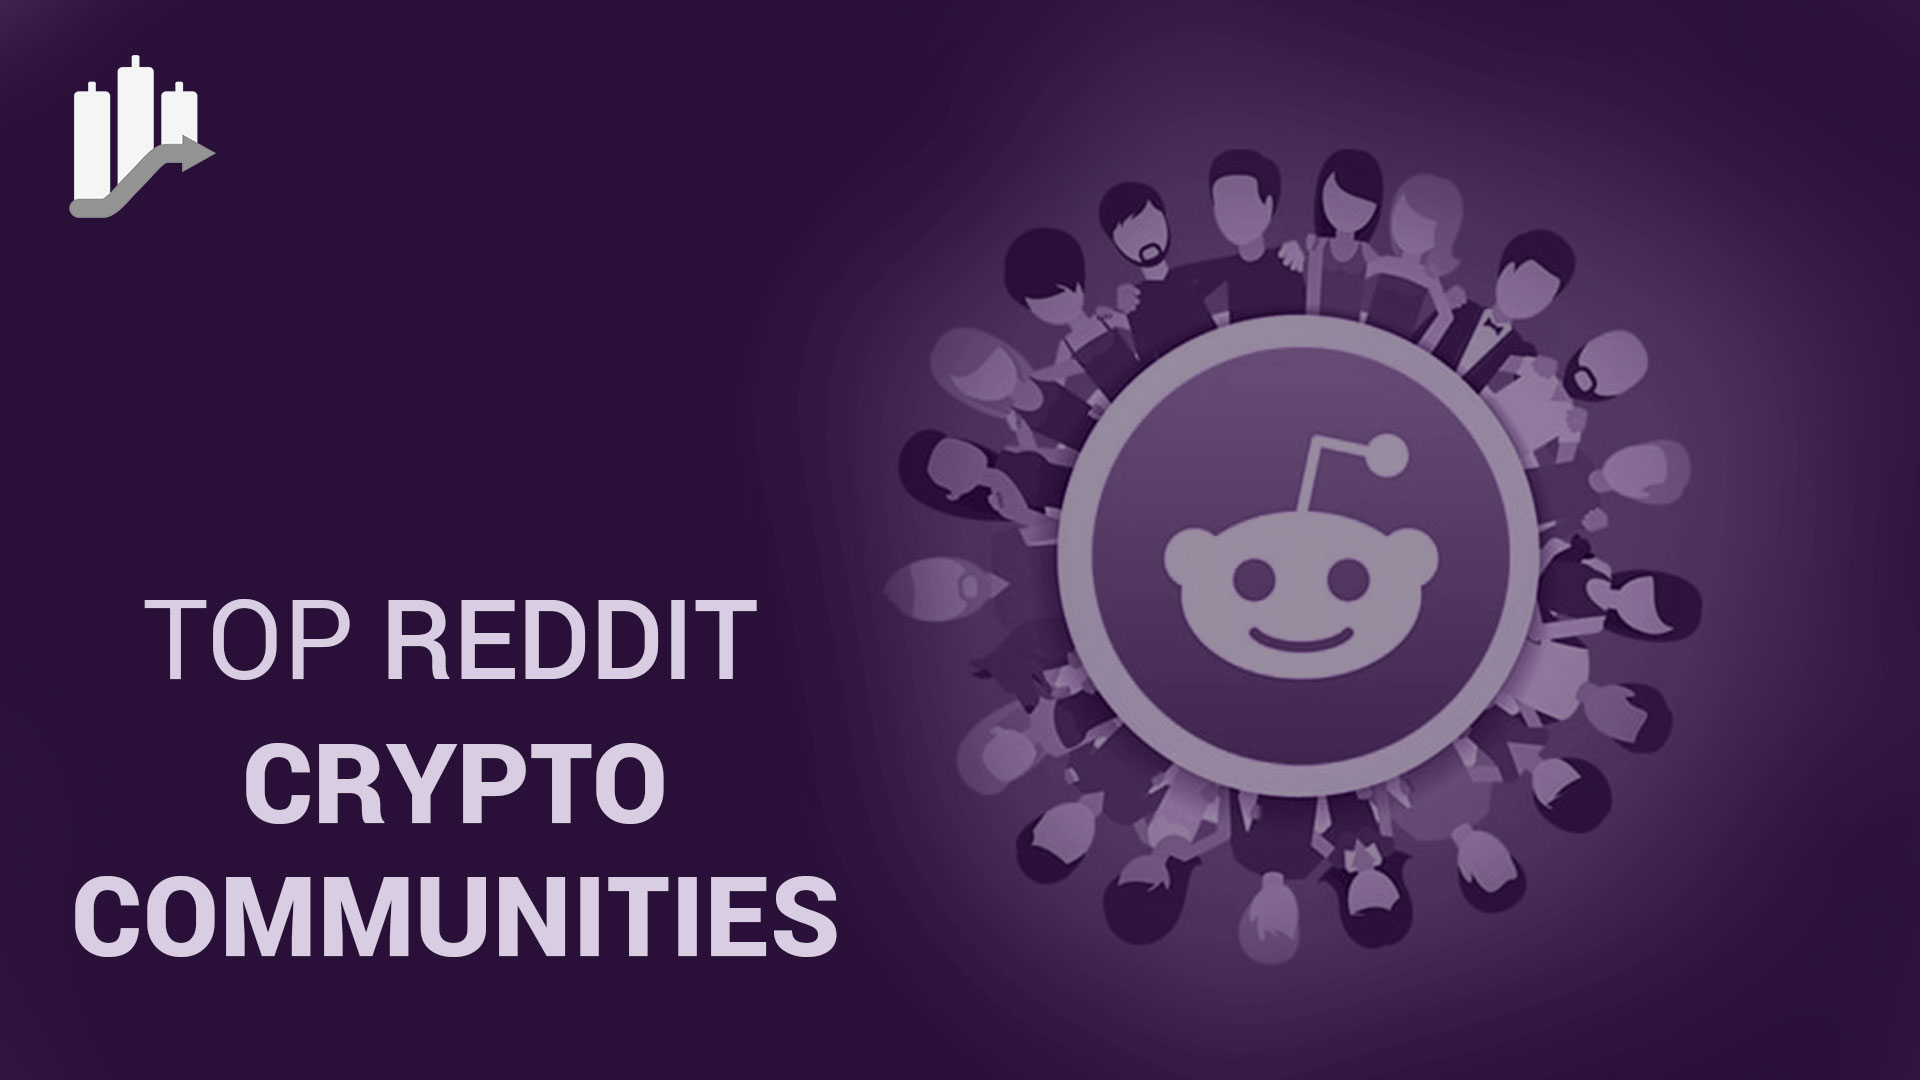 Reddit: Next Crypto to Explode by 2023 Based on Reddit